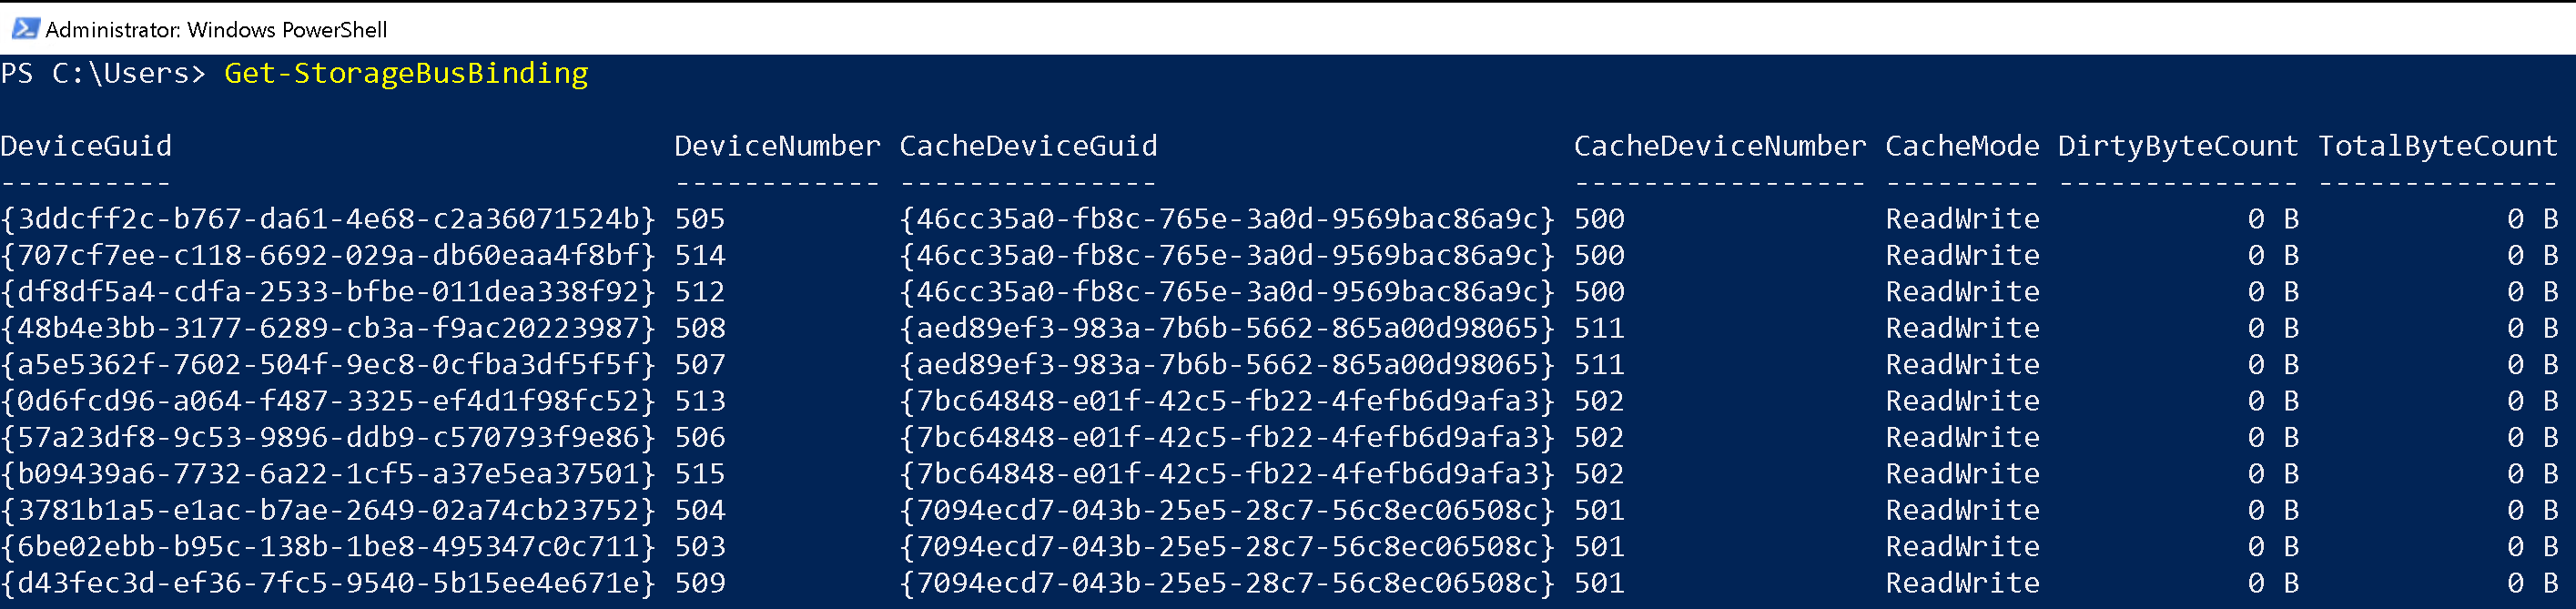 Screenshot showing the output of Get-StorageBusBinding.